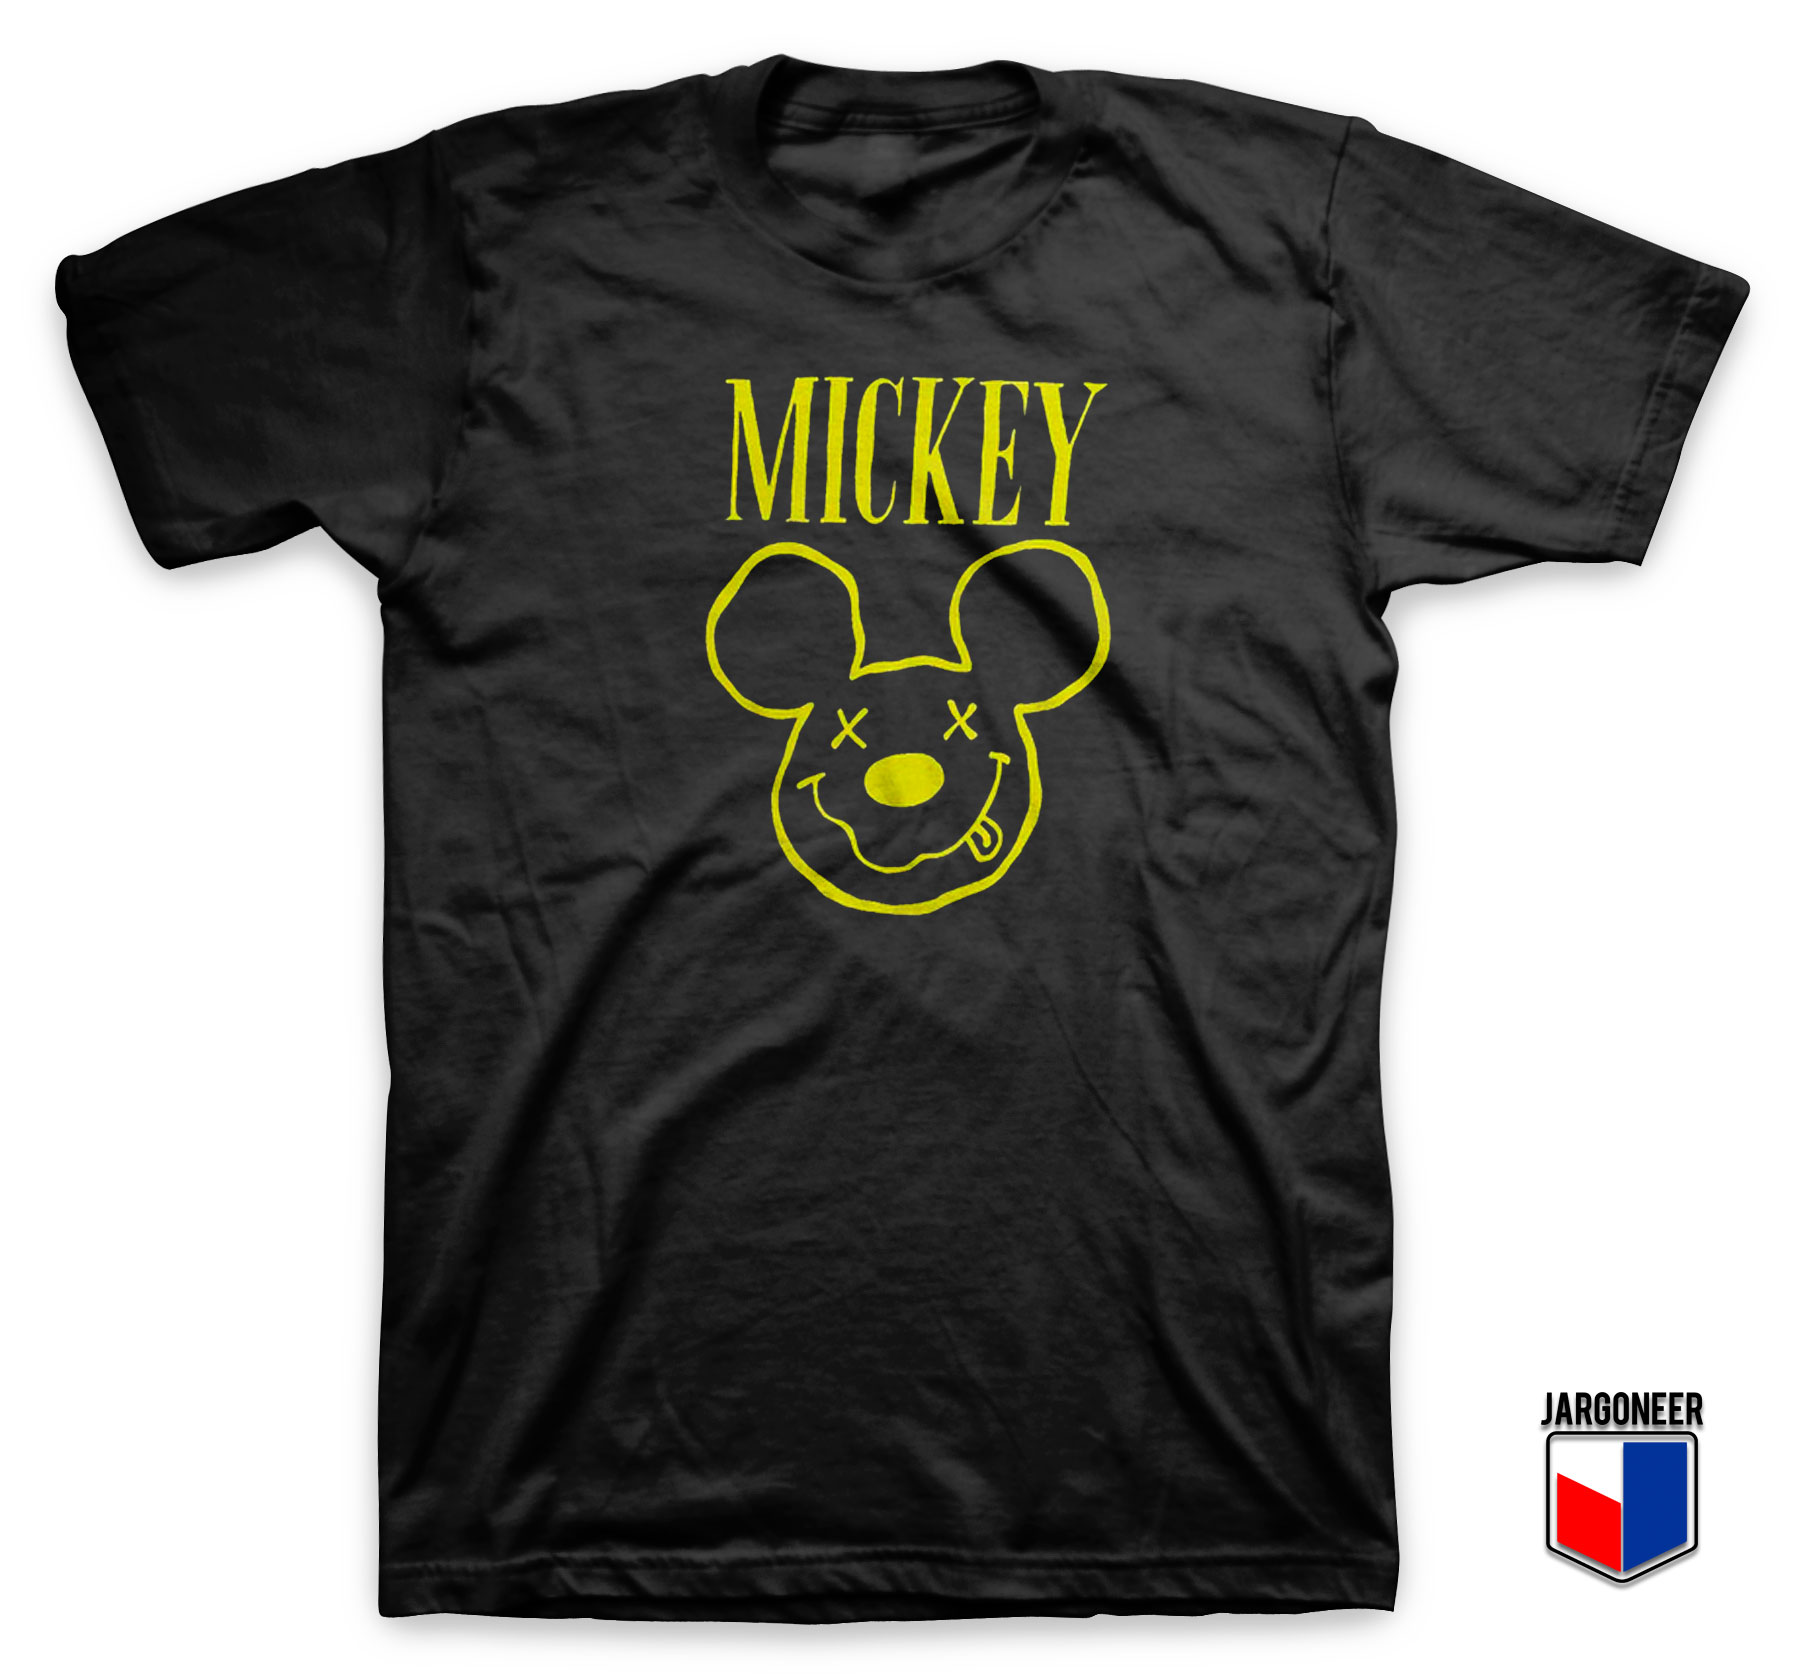 Mickey Nirvana Parody T Shirt - Shop Unique Graphic Cool Shirt Designs